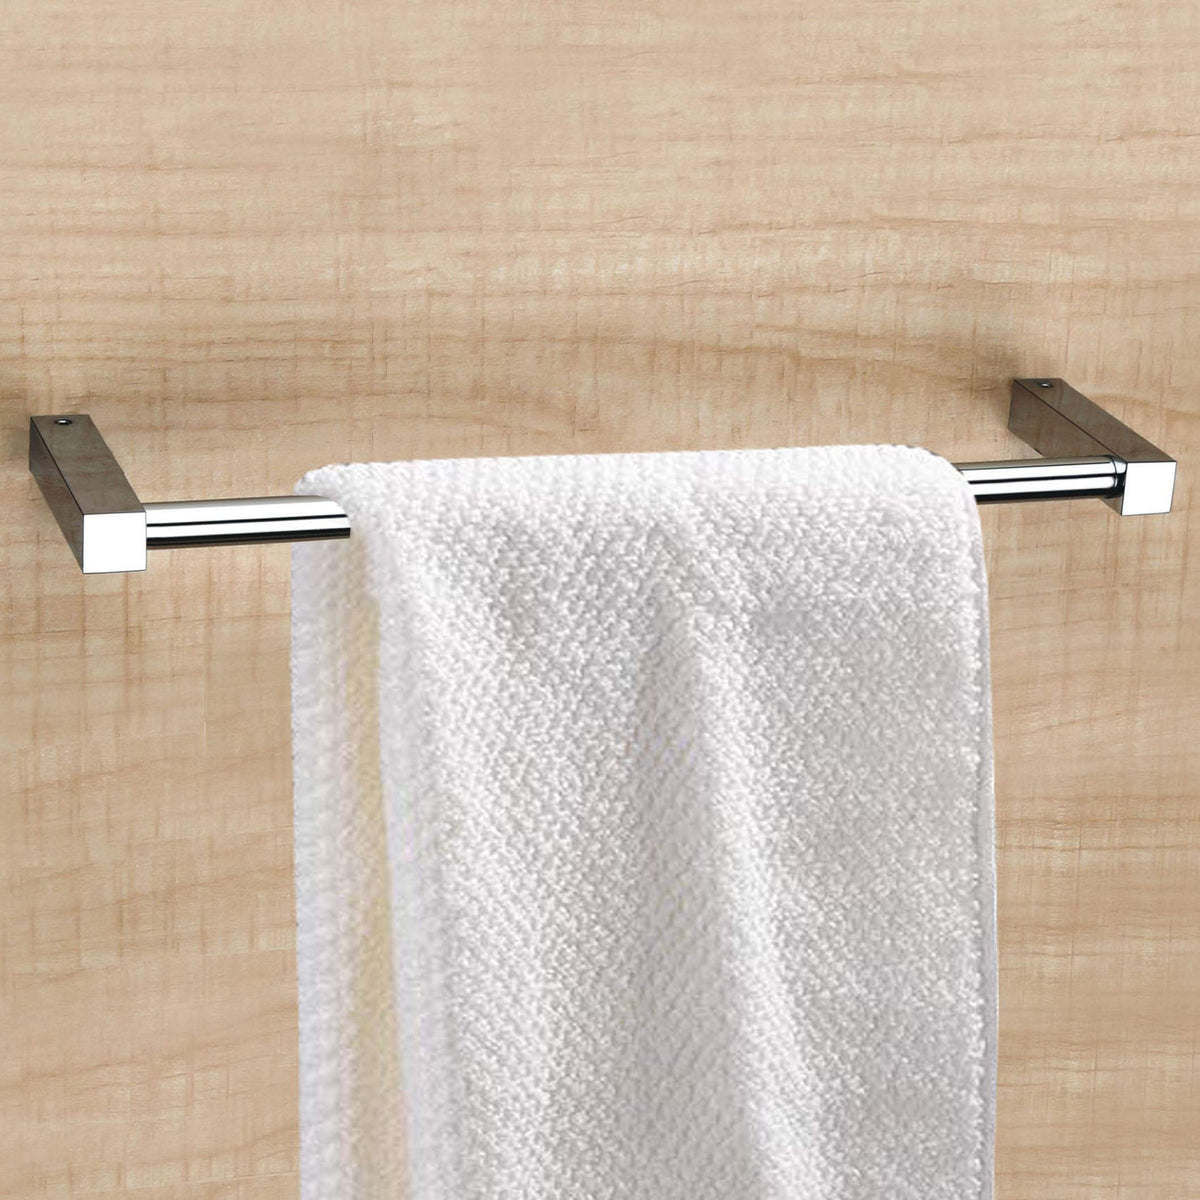 Plantex Stainless Steel Towel Hanger for Bathroom/Towel Rod/Bar/Bathroom Accessories (18 Inch-Chrome - 1004)